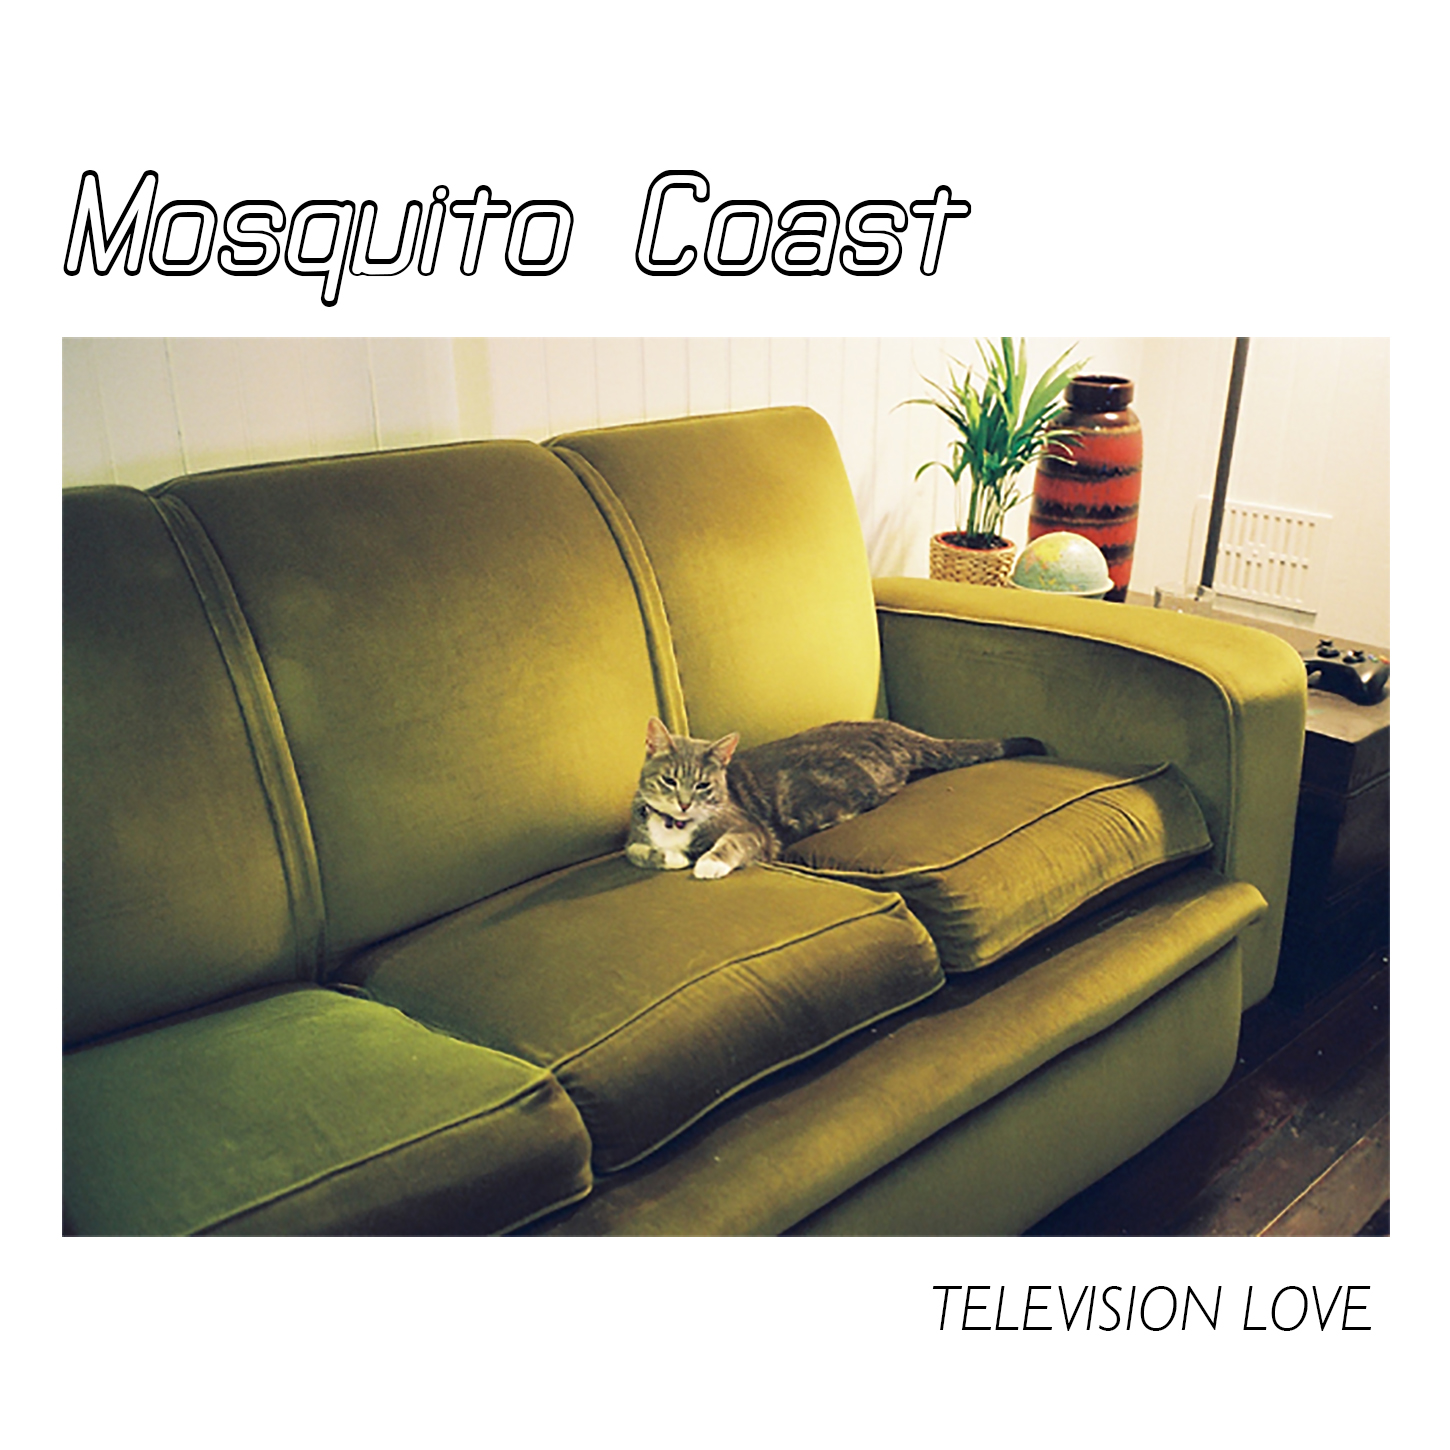 Mosquito Coast – Television Love EP